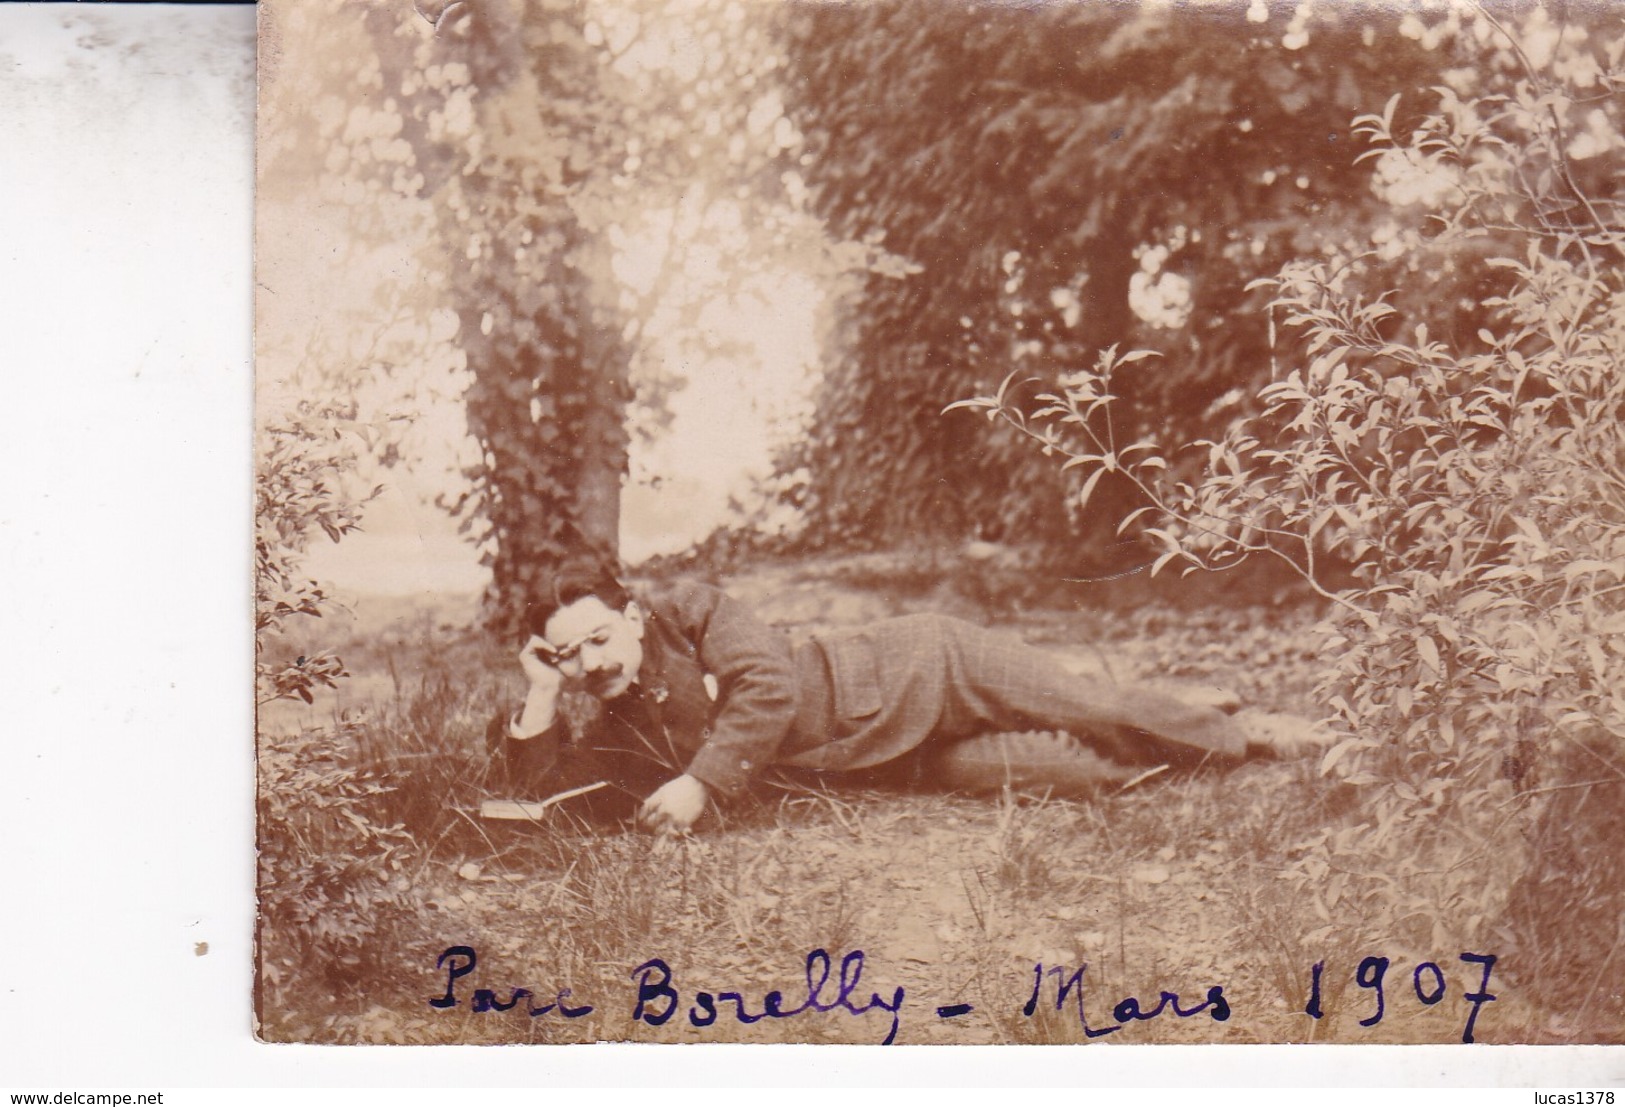 JOLI PHOTO MARSEILLE / PARC BORELY / MARS 1907 - Parchi E Giardini